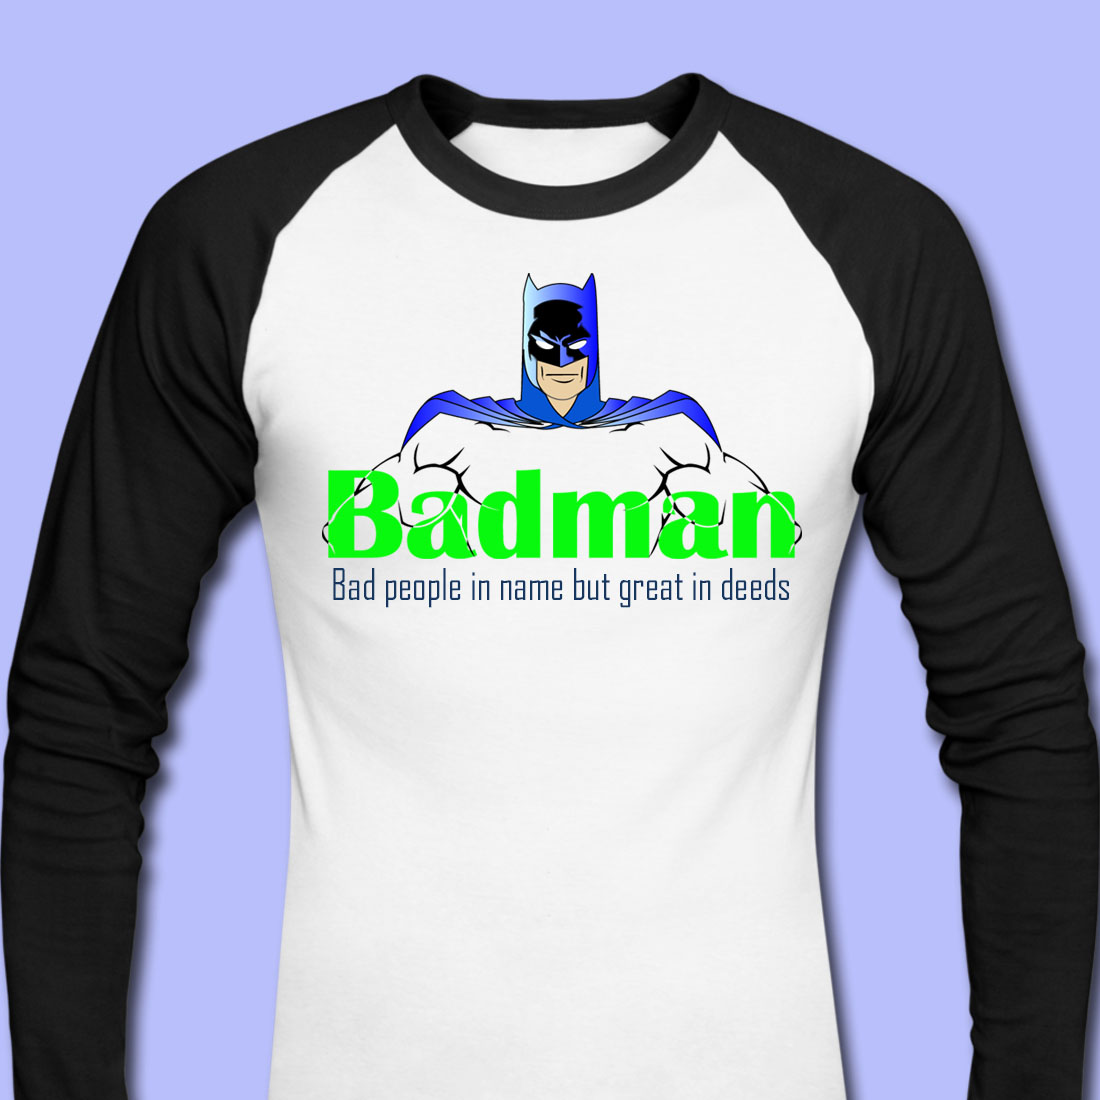 Bedman t-shirt design cover image.